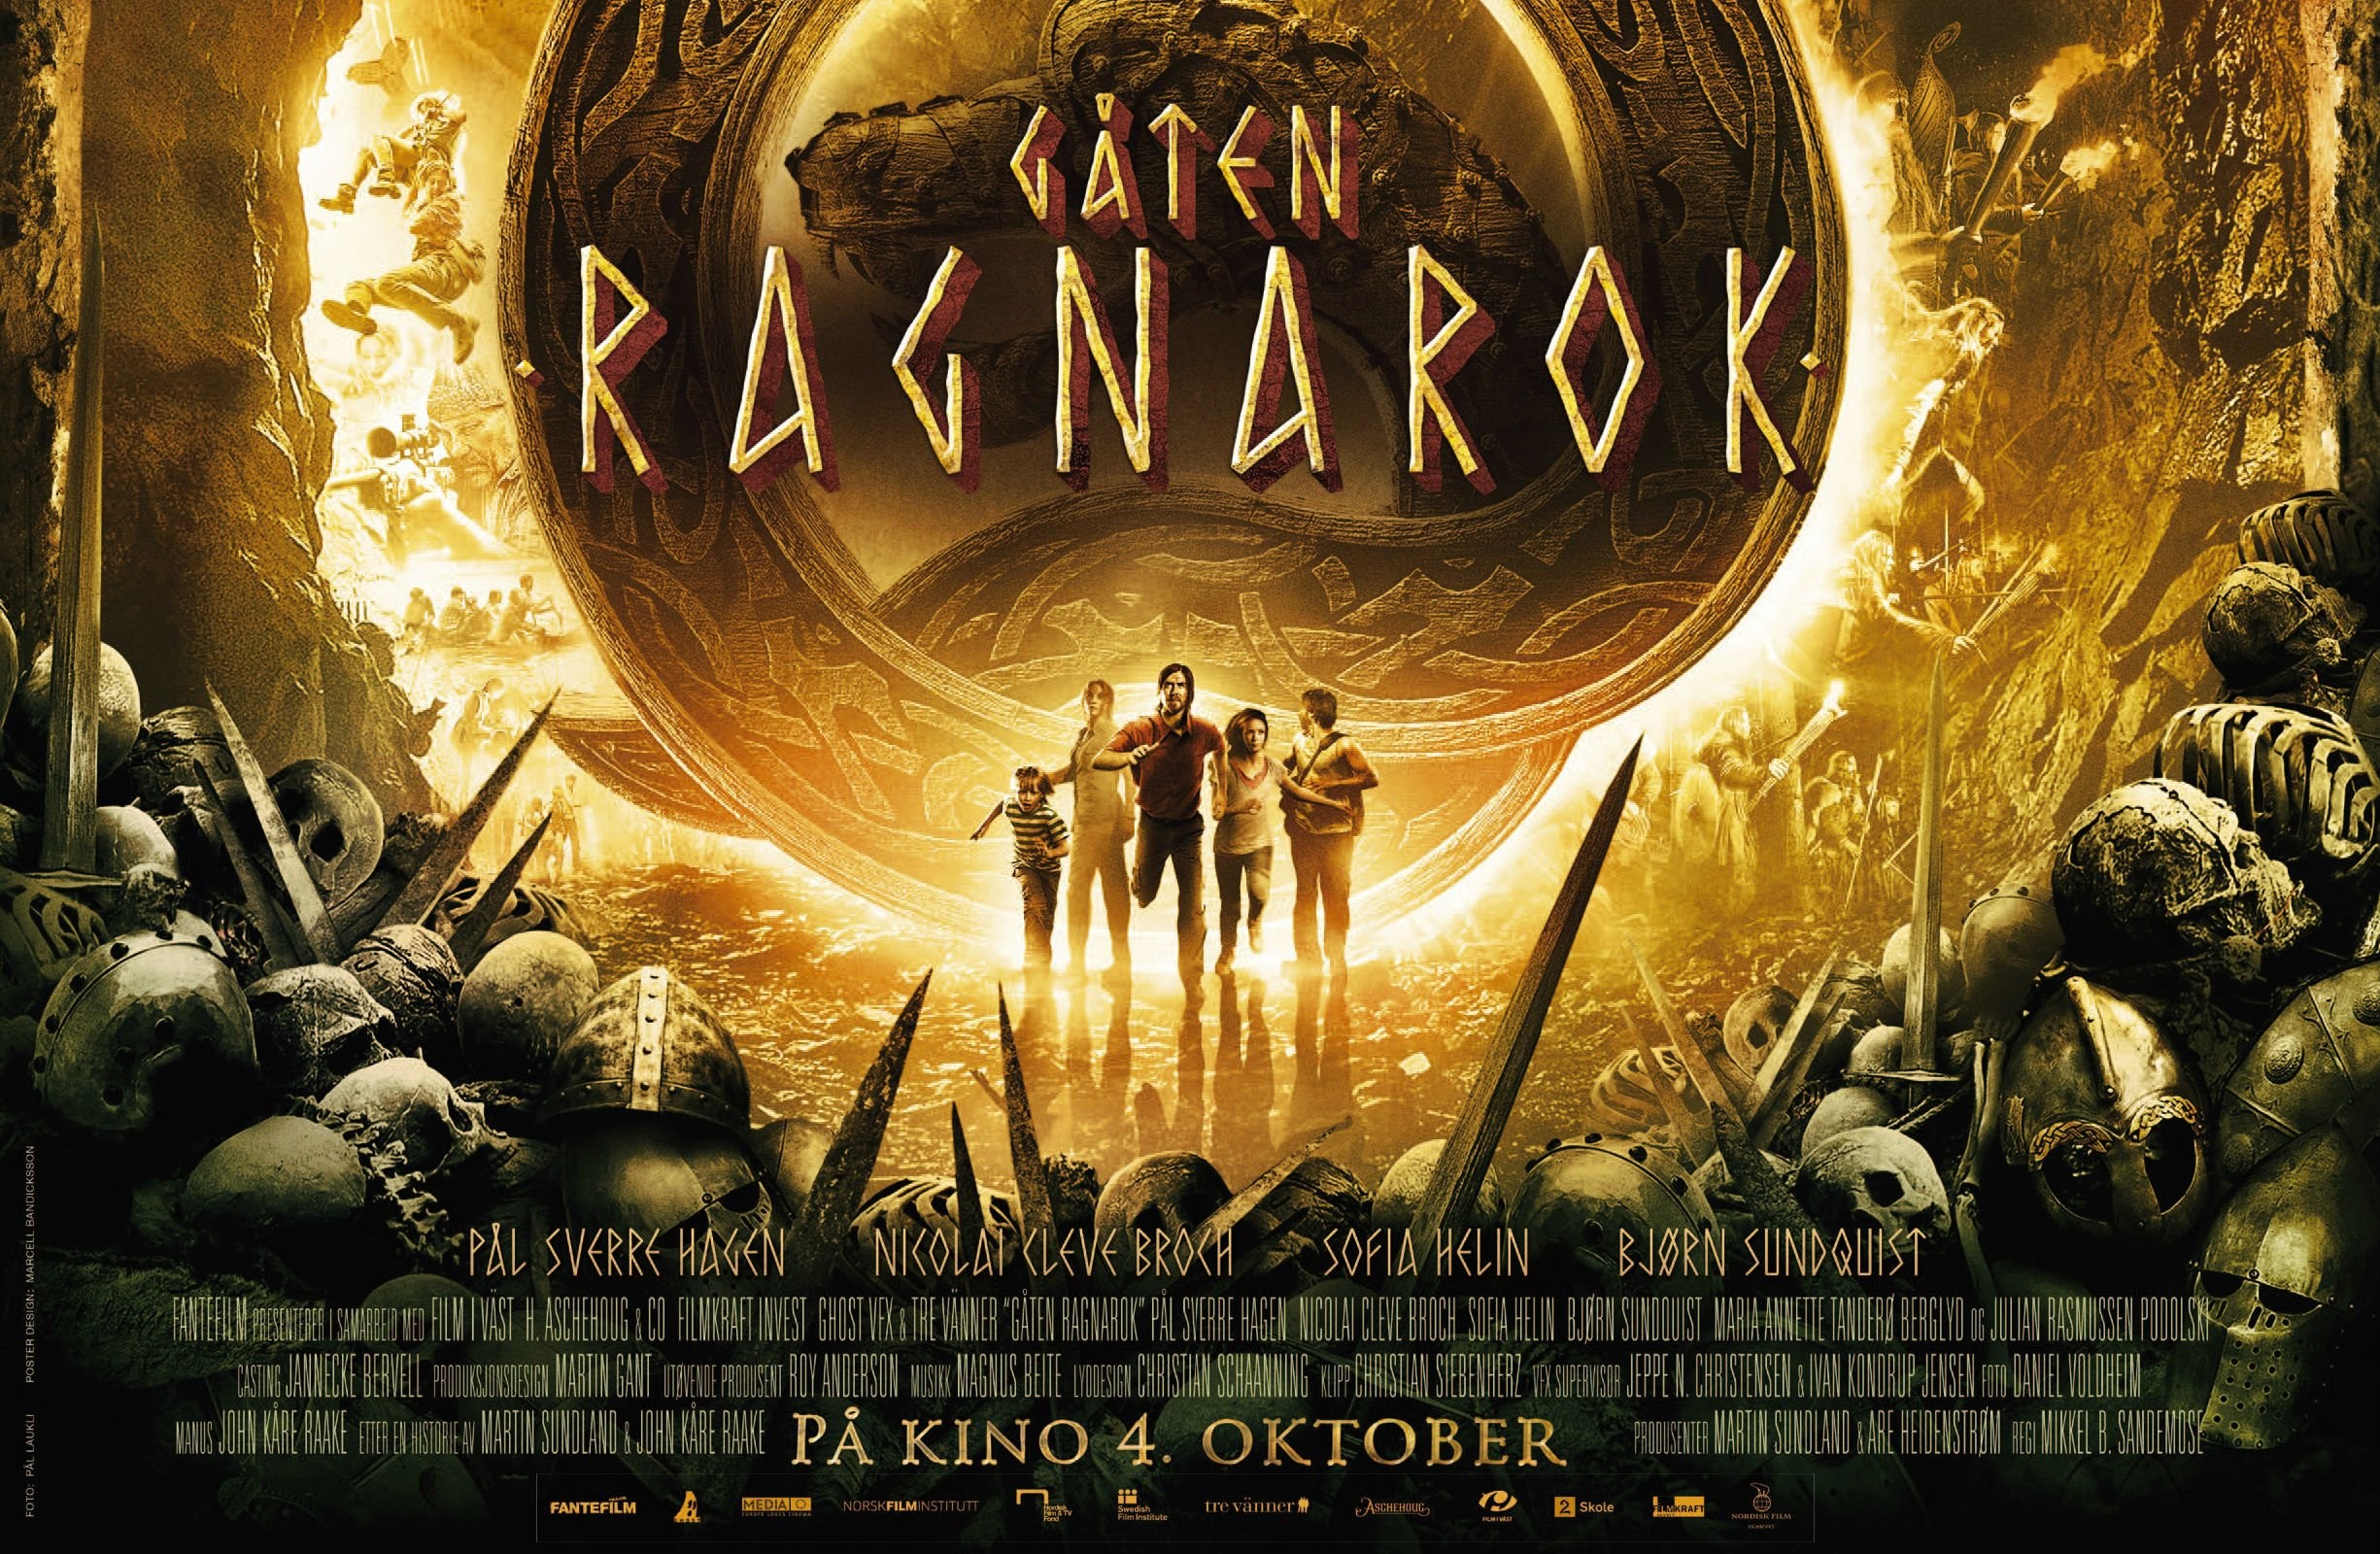 2450x1600 GATEN RAGNAROK action adventure norse viking fantasy 1gaten poster wallpaper  |  | 630469 | WallpaperUP